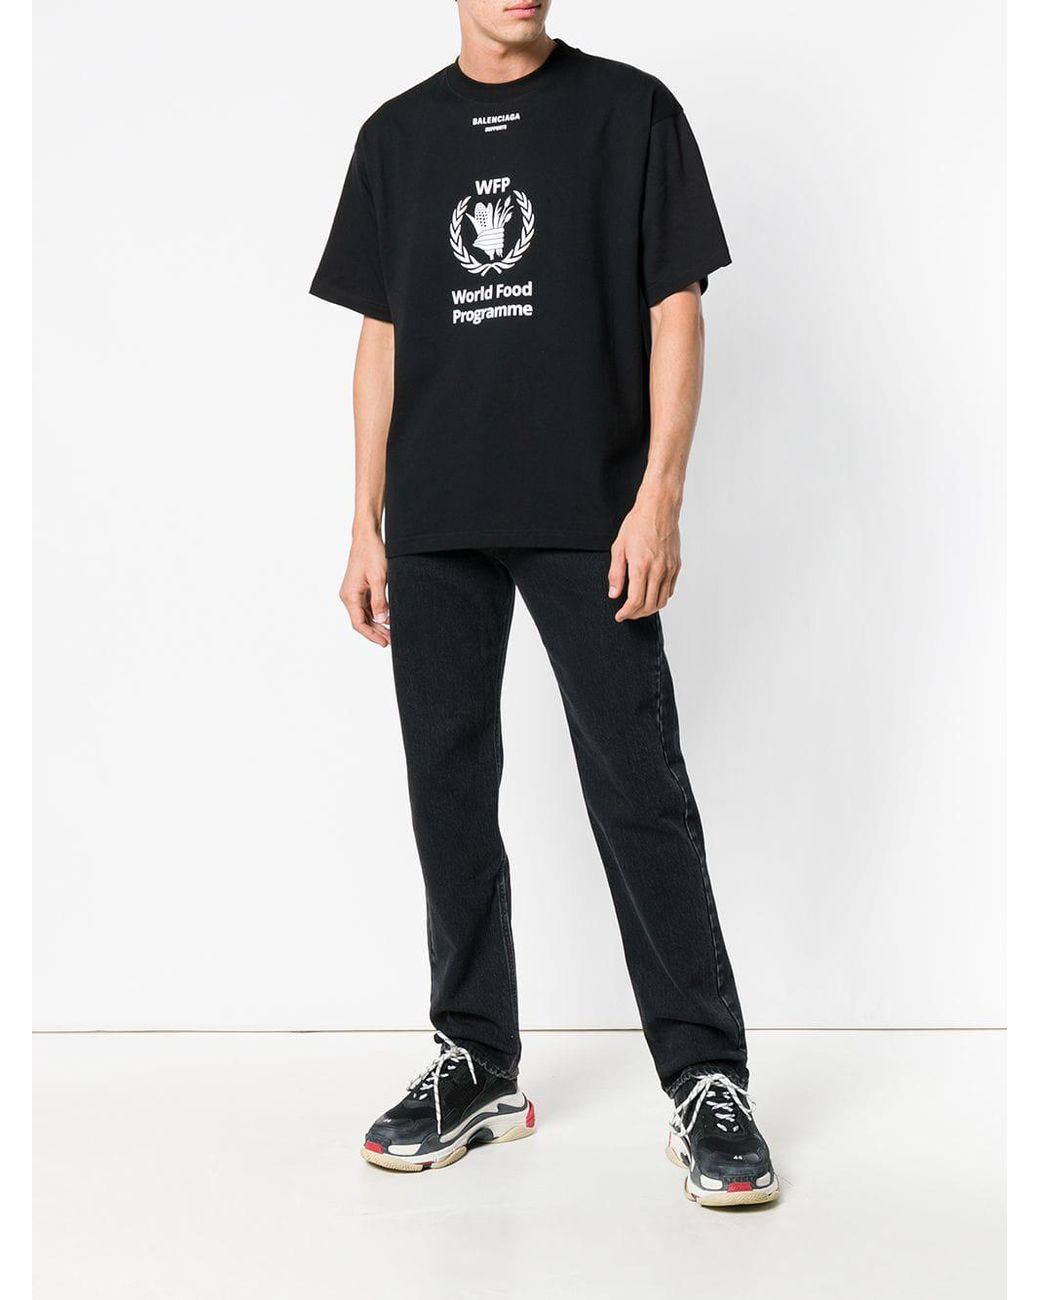 Balenciaga World Food Programme Black TShirt Short Sleeve Size S  eBay